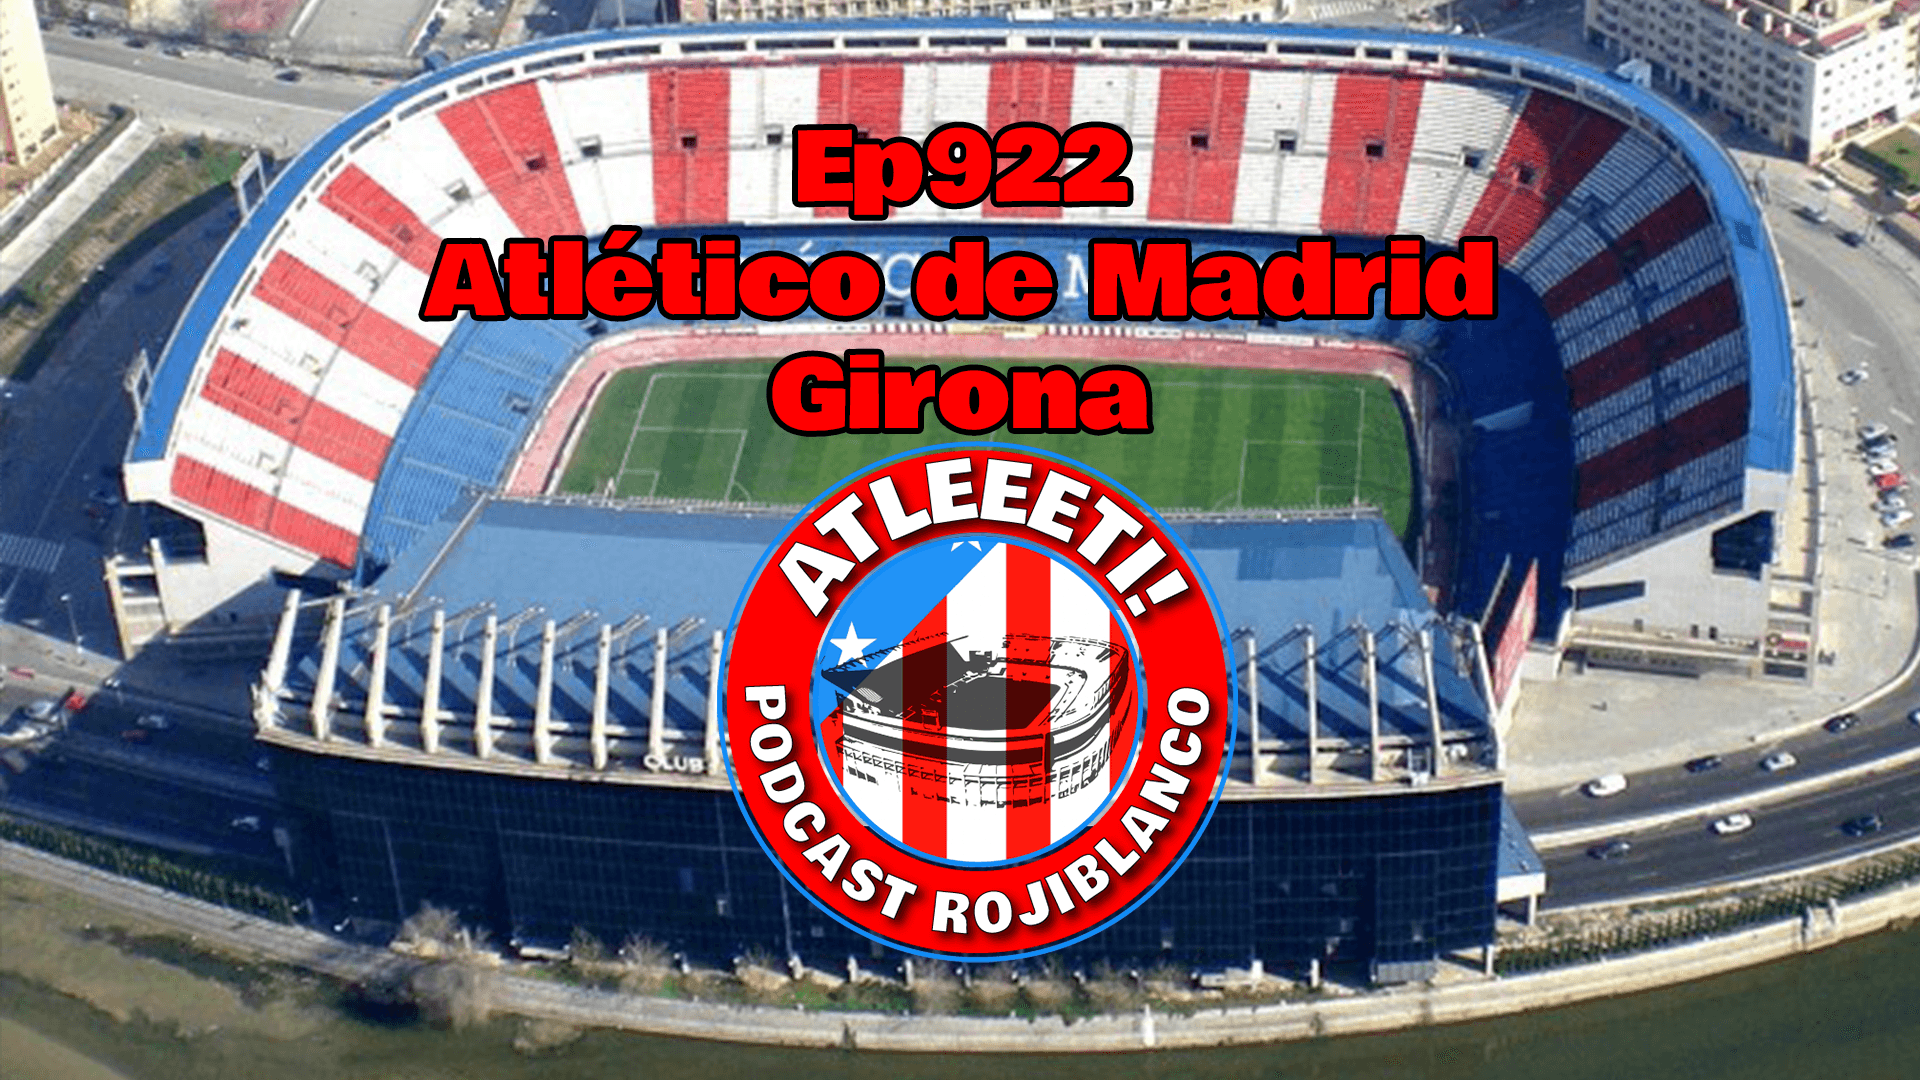 Ep922: Atlético de Madrid 3-1 Girona